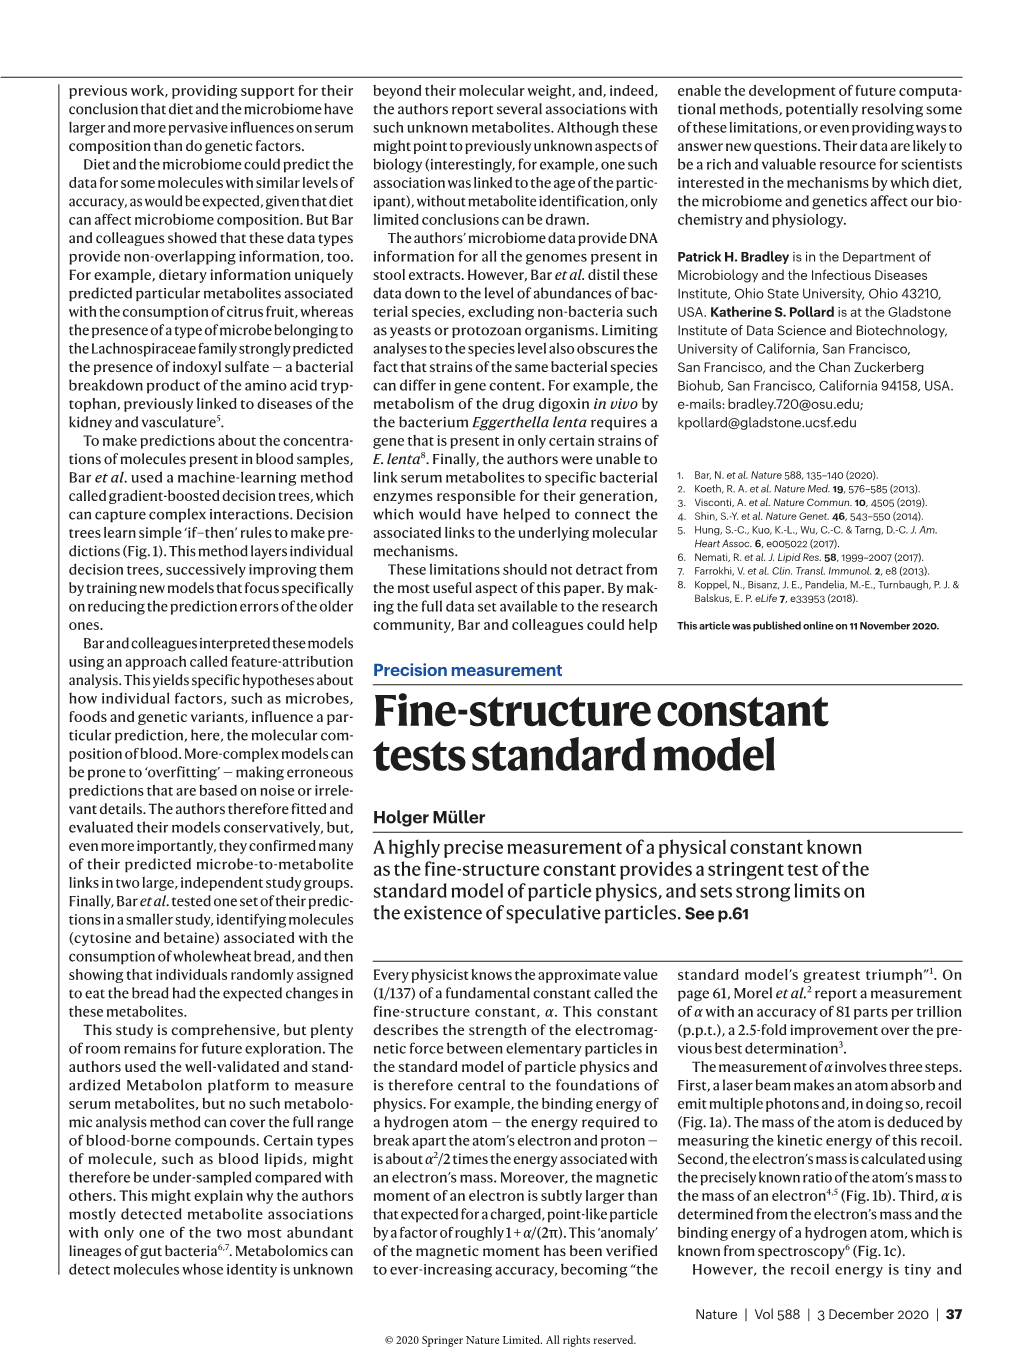 Fine-Structure Constant Tests Standard Model